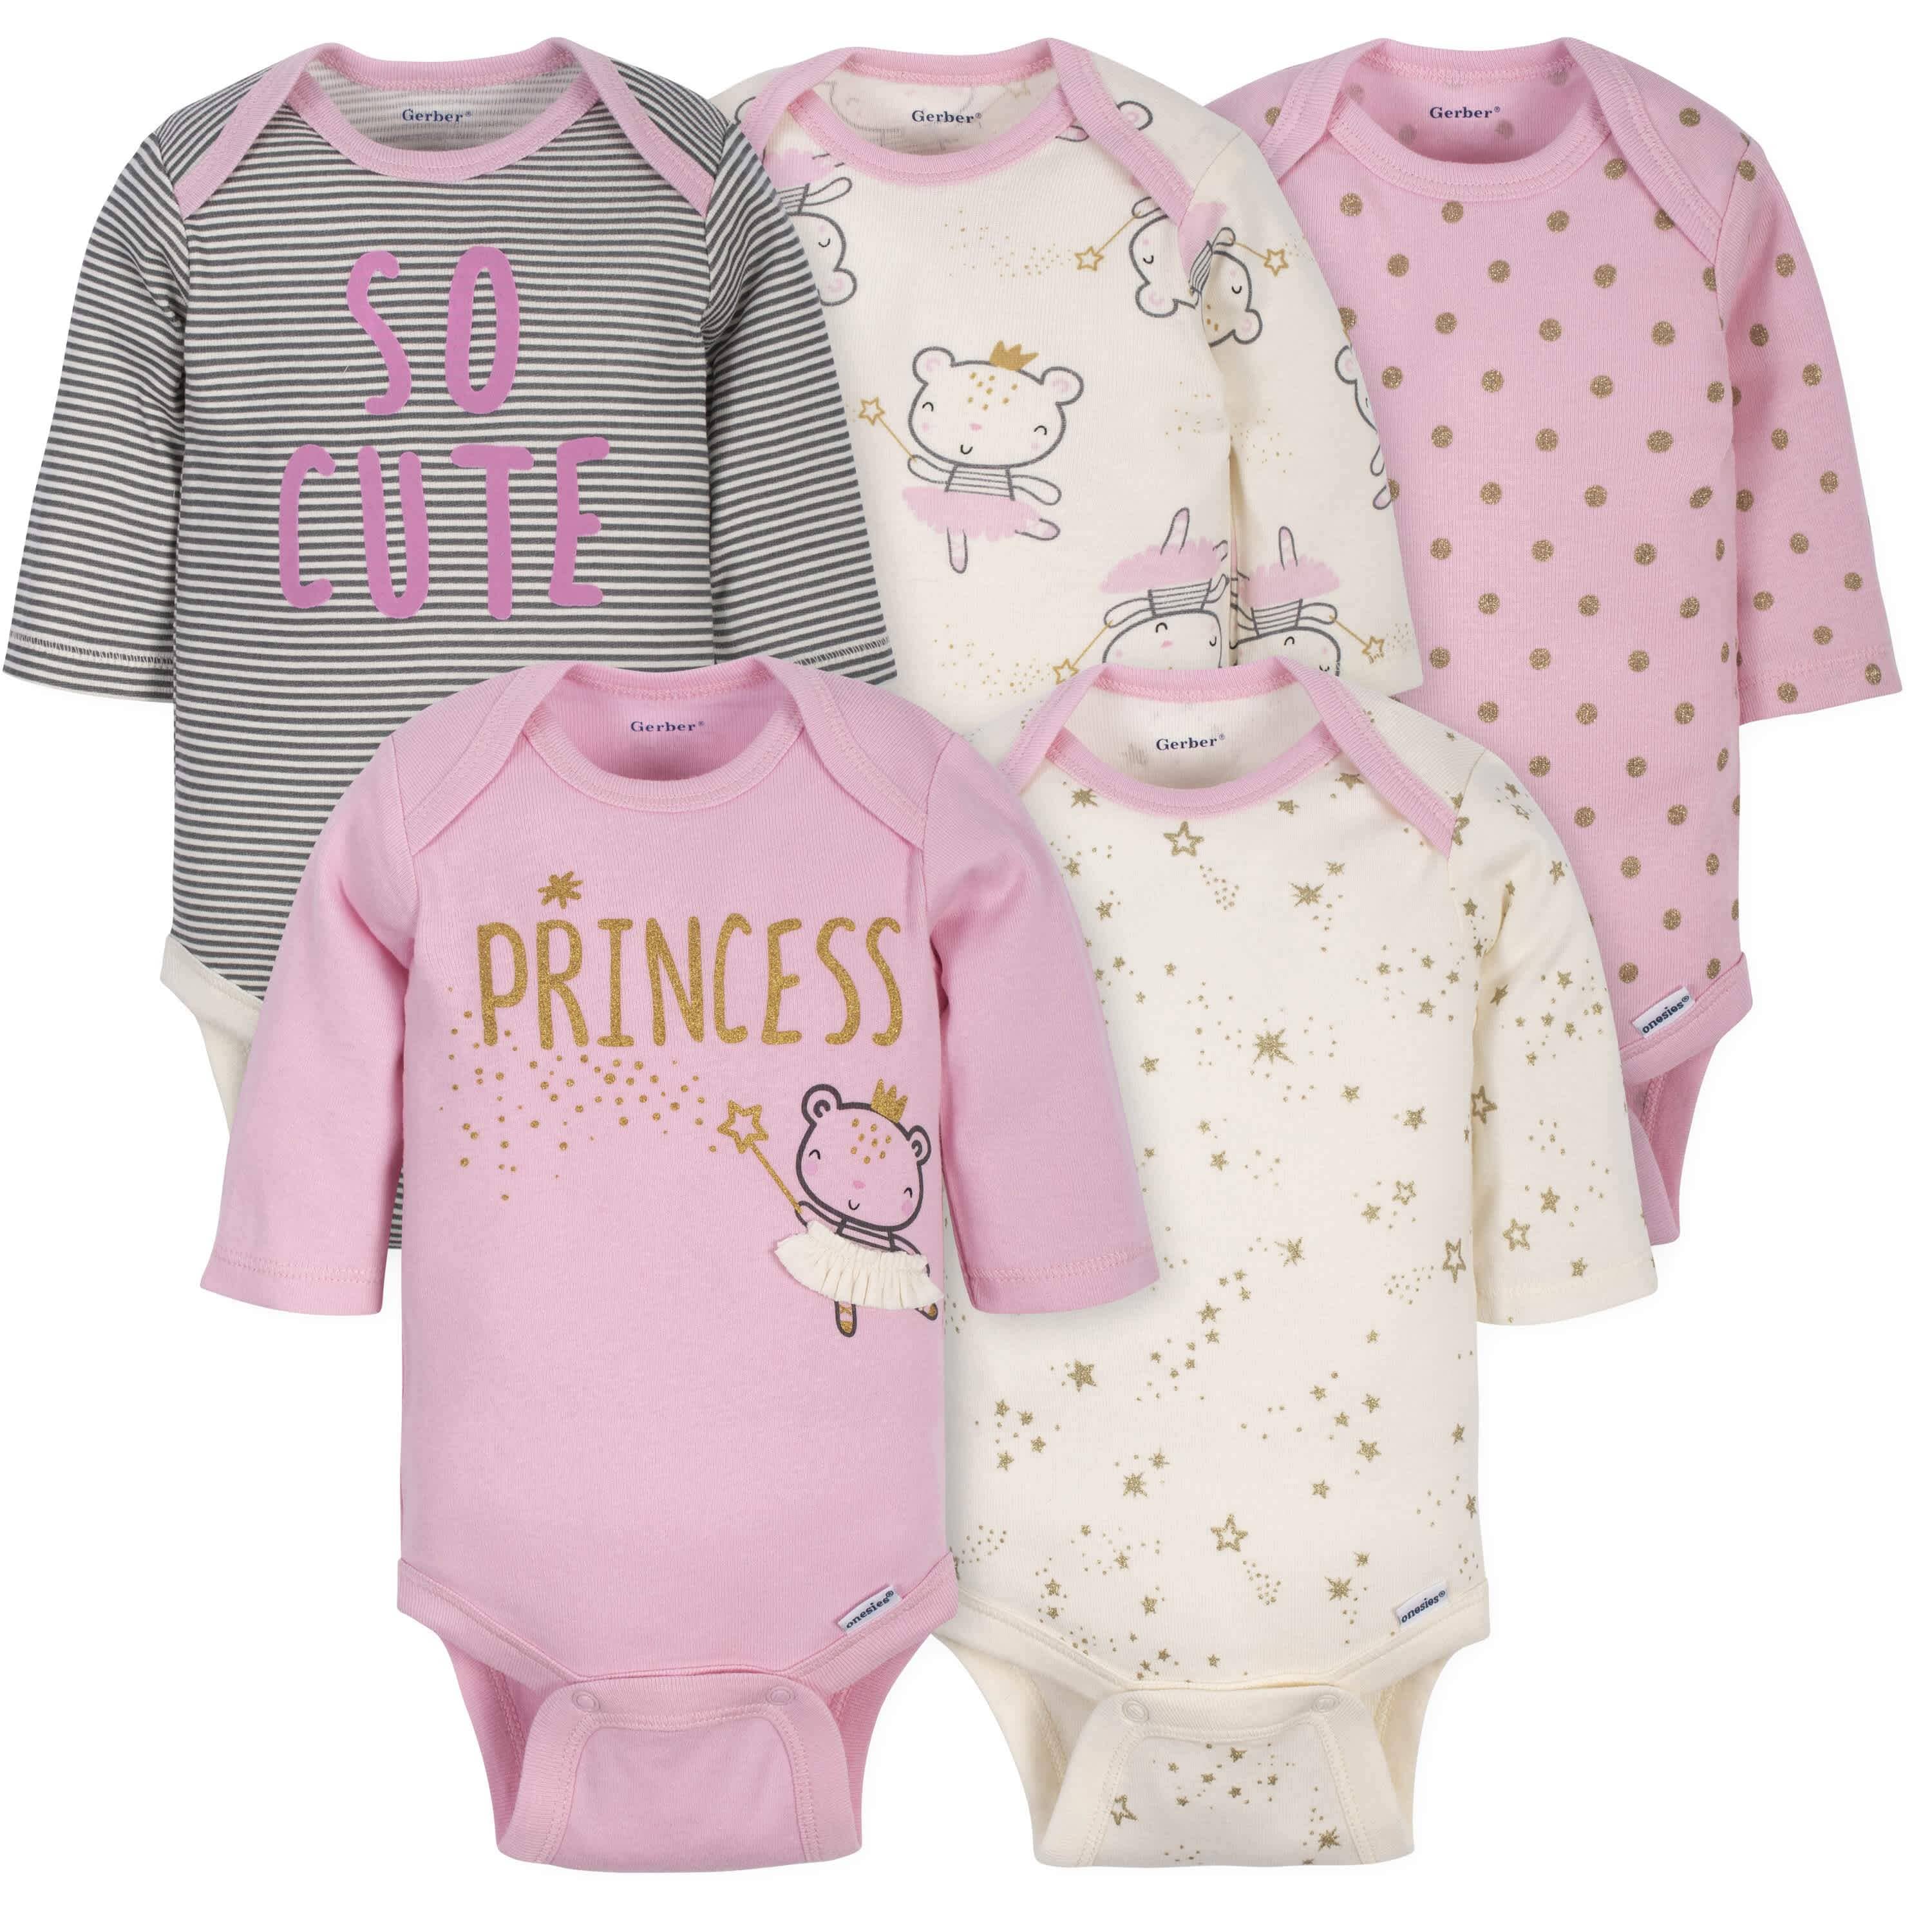 princess onesies for baby girl